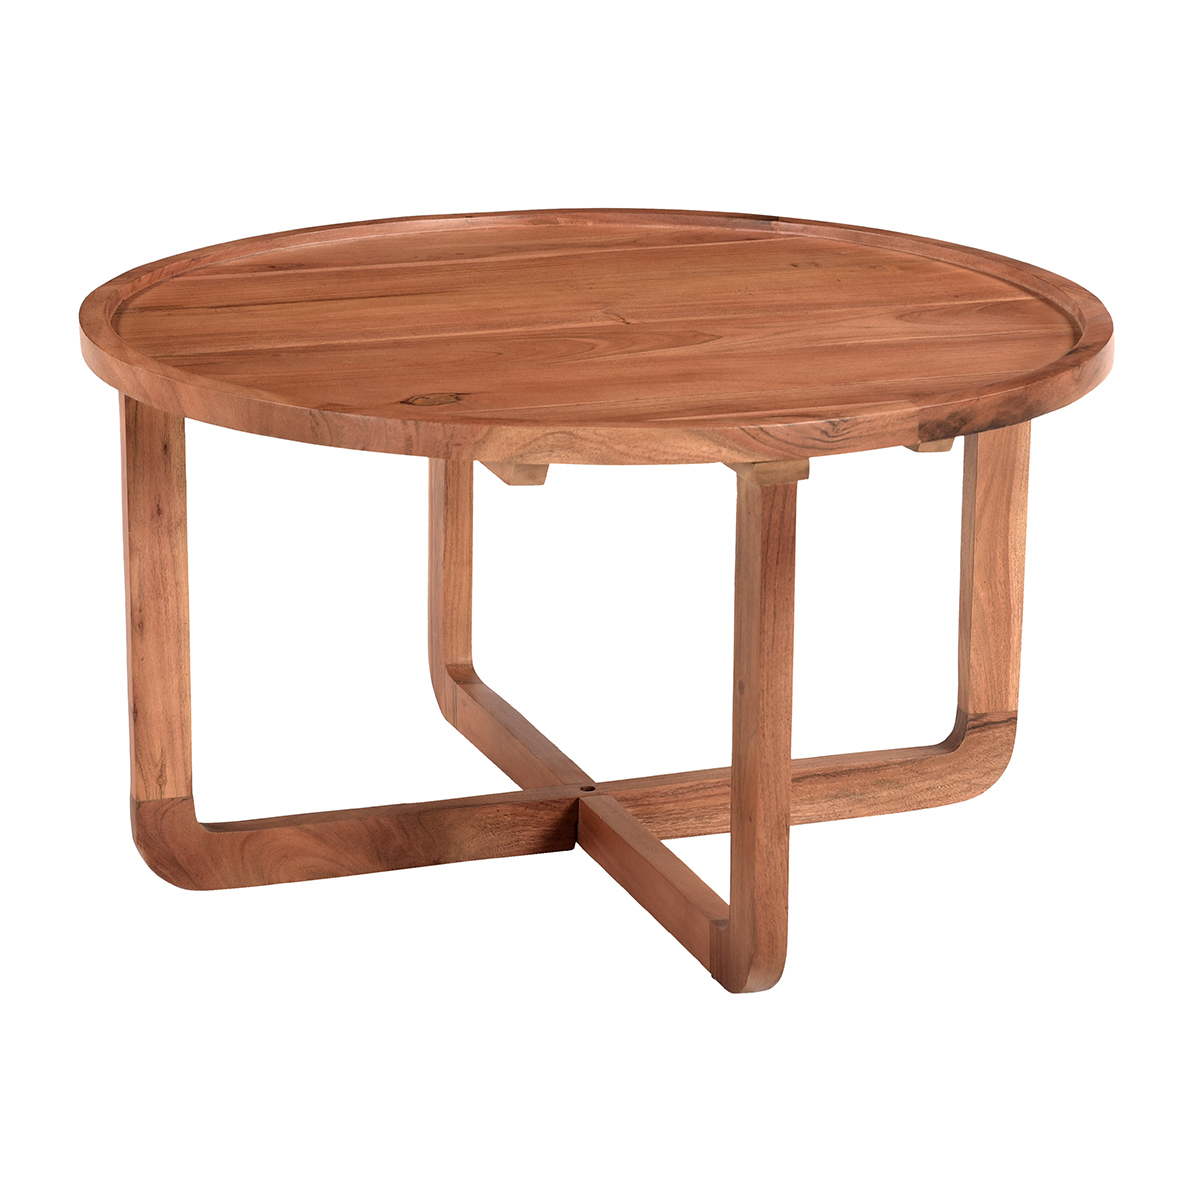 Table basse ronde bois massif D80 cm HITA vue1